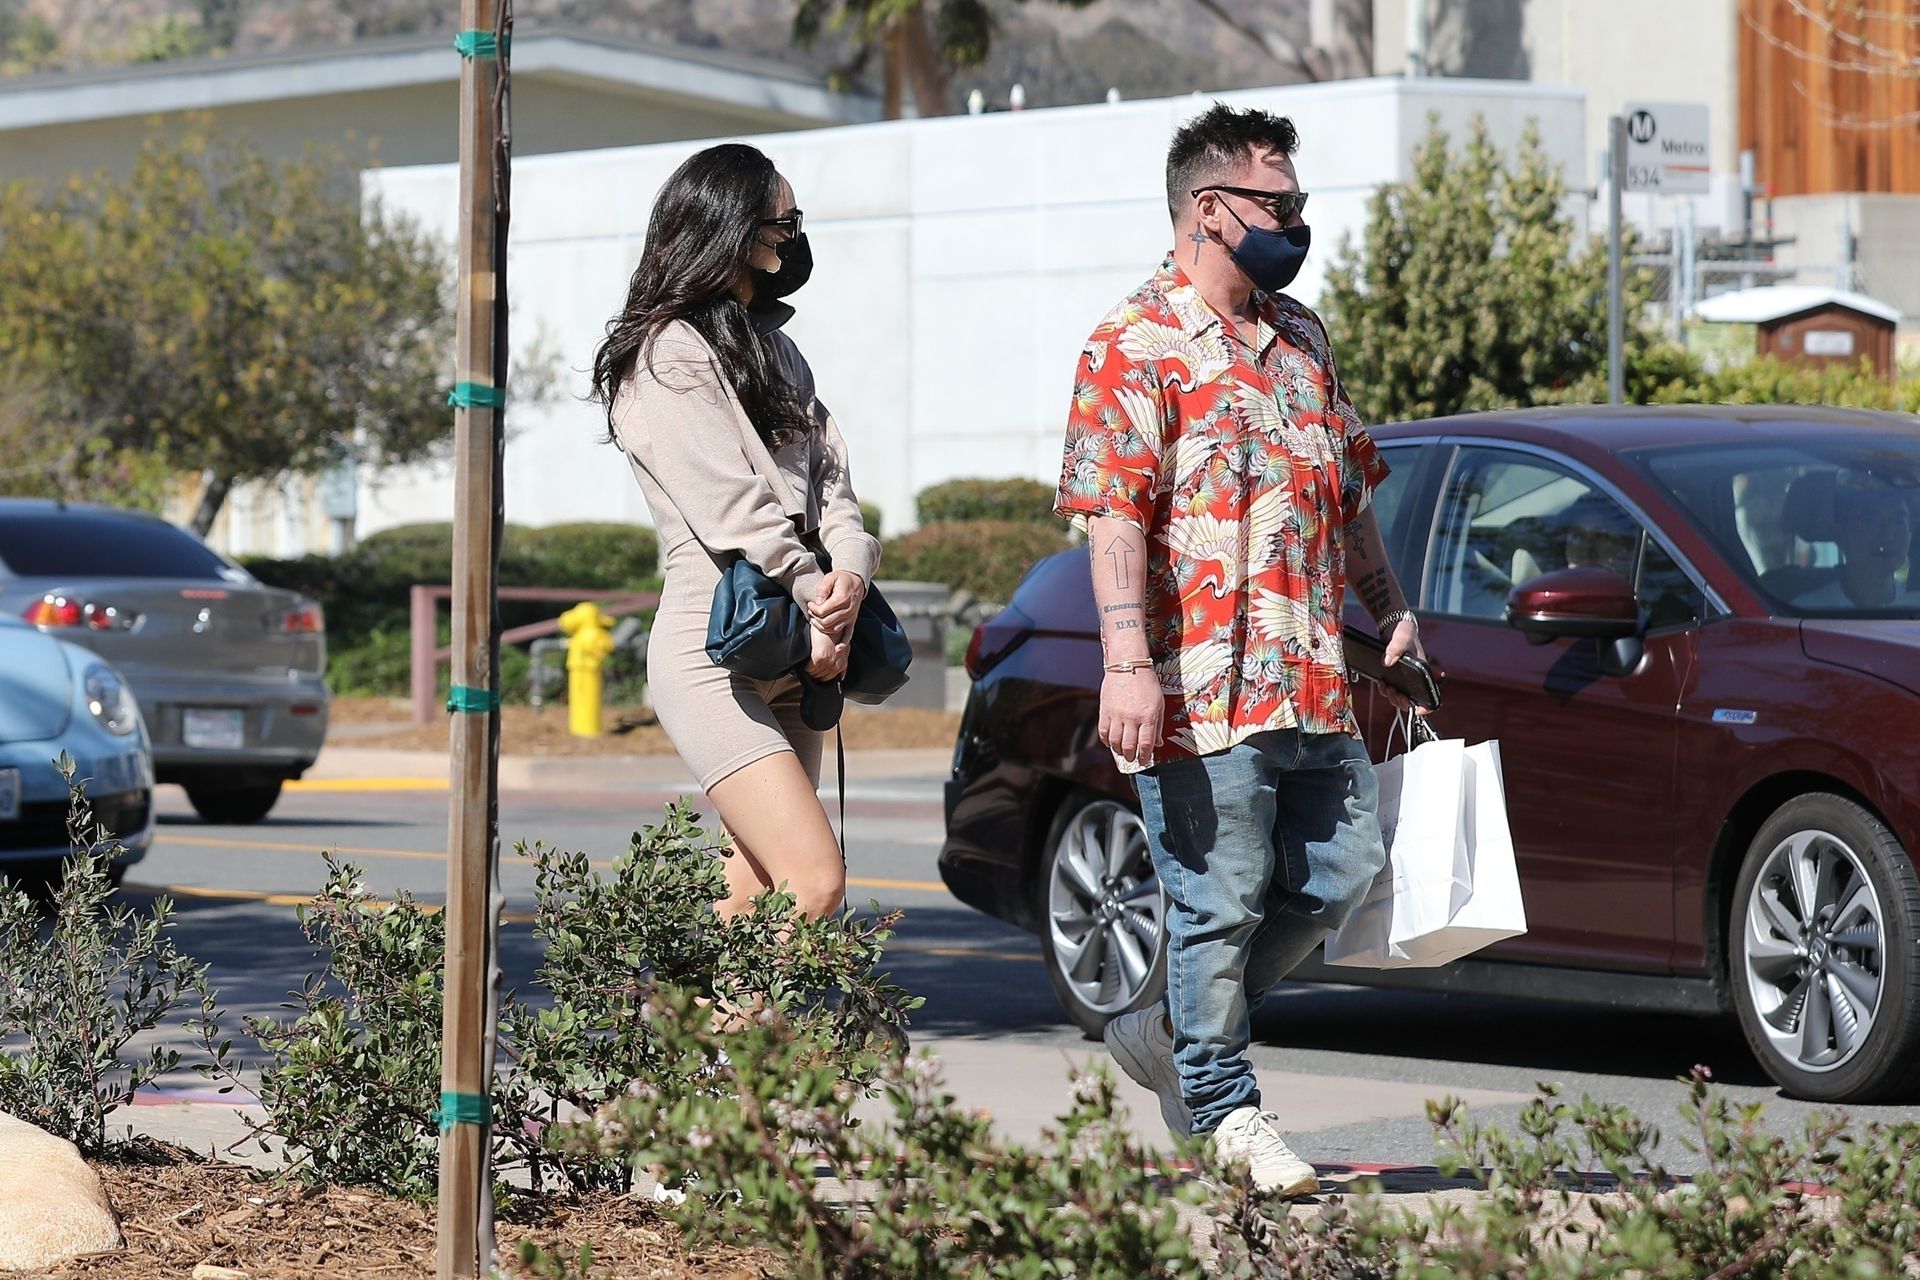 Cara Santana & Shannon Leto Go Shopping Together in Malibu (34 Photos)